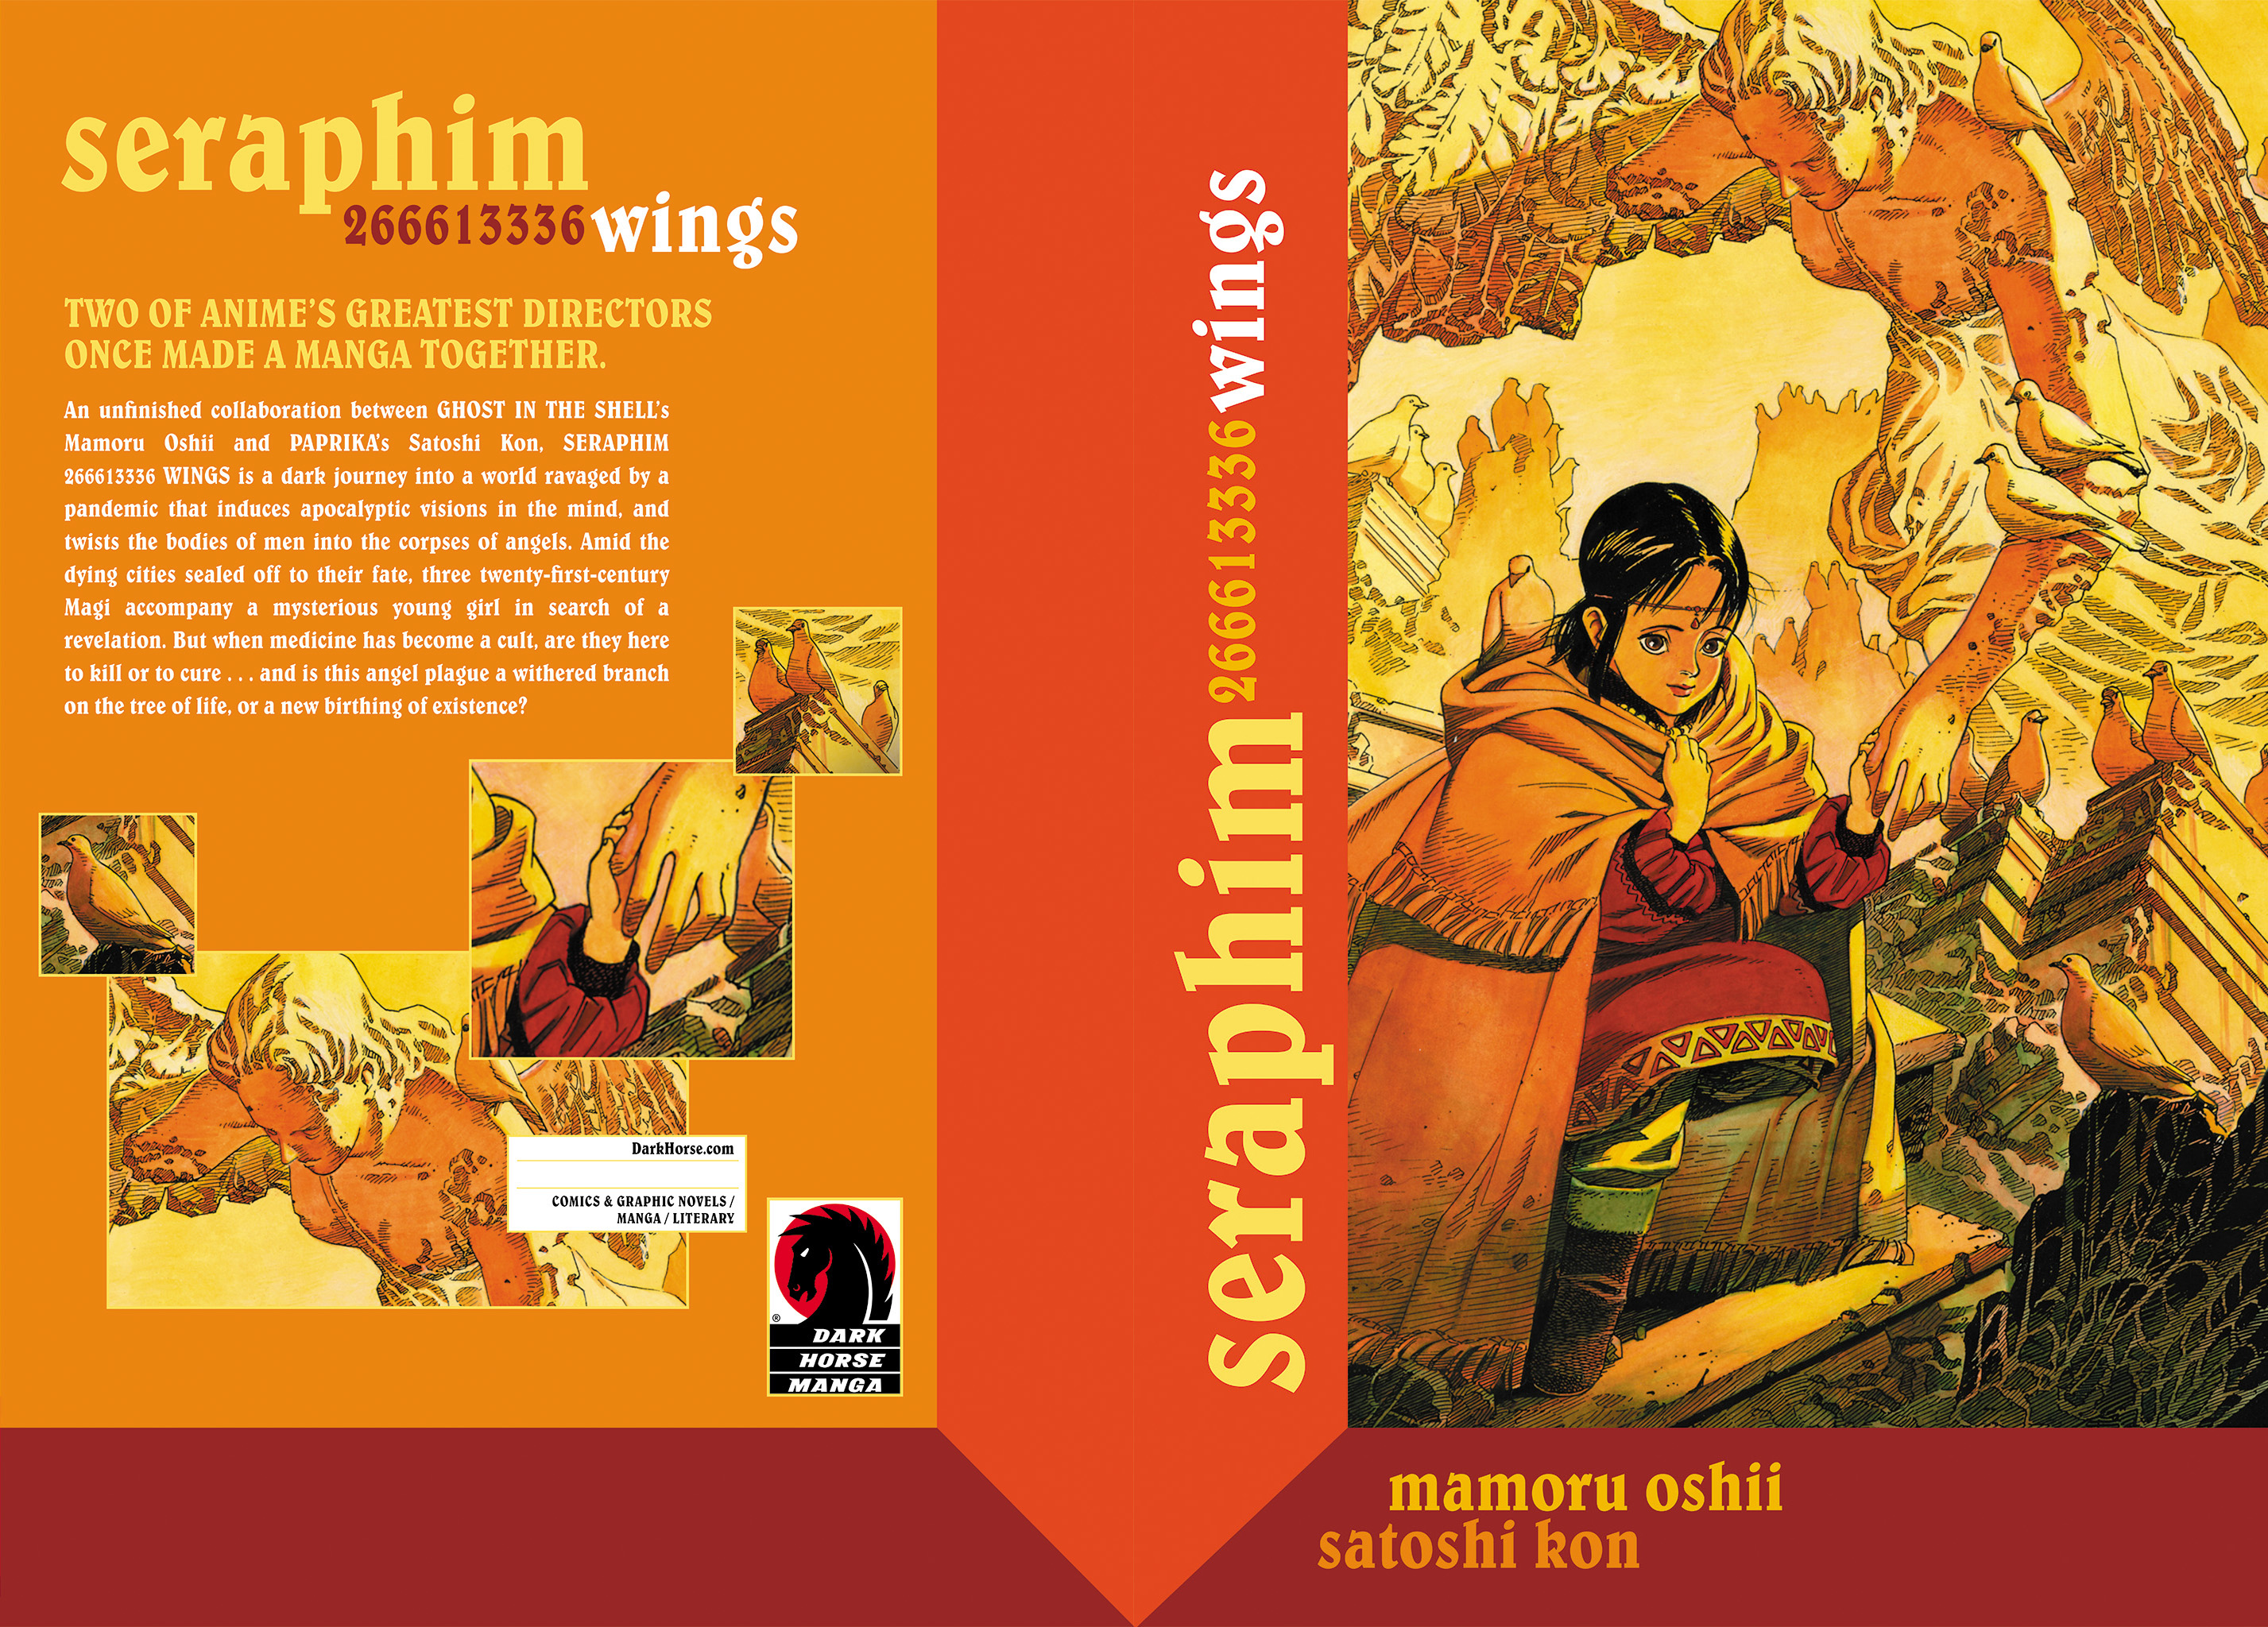 Read online Seraphim 266613336 Wings comic -  Issue # TPB - 265